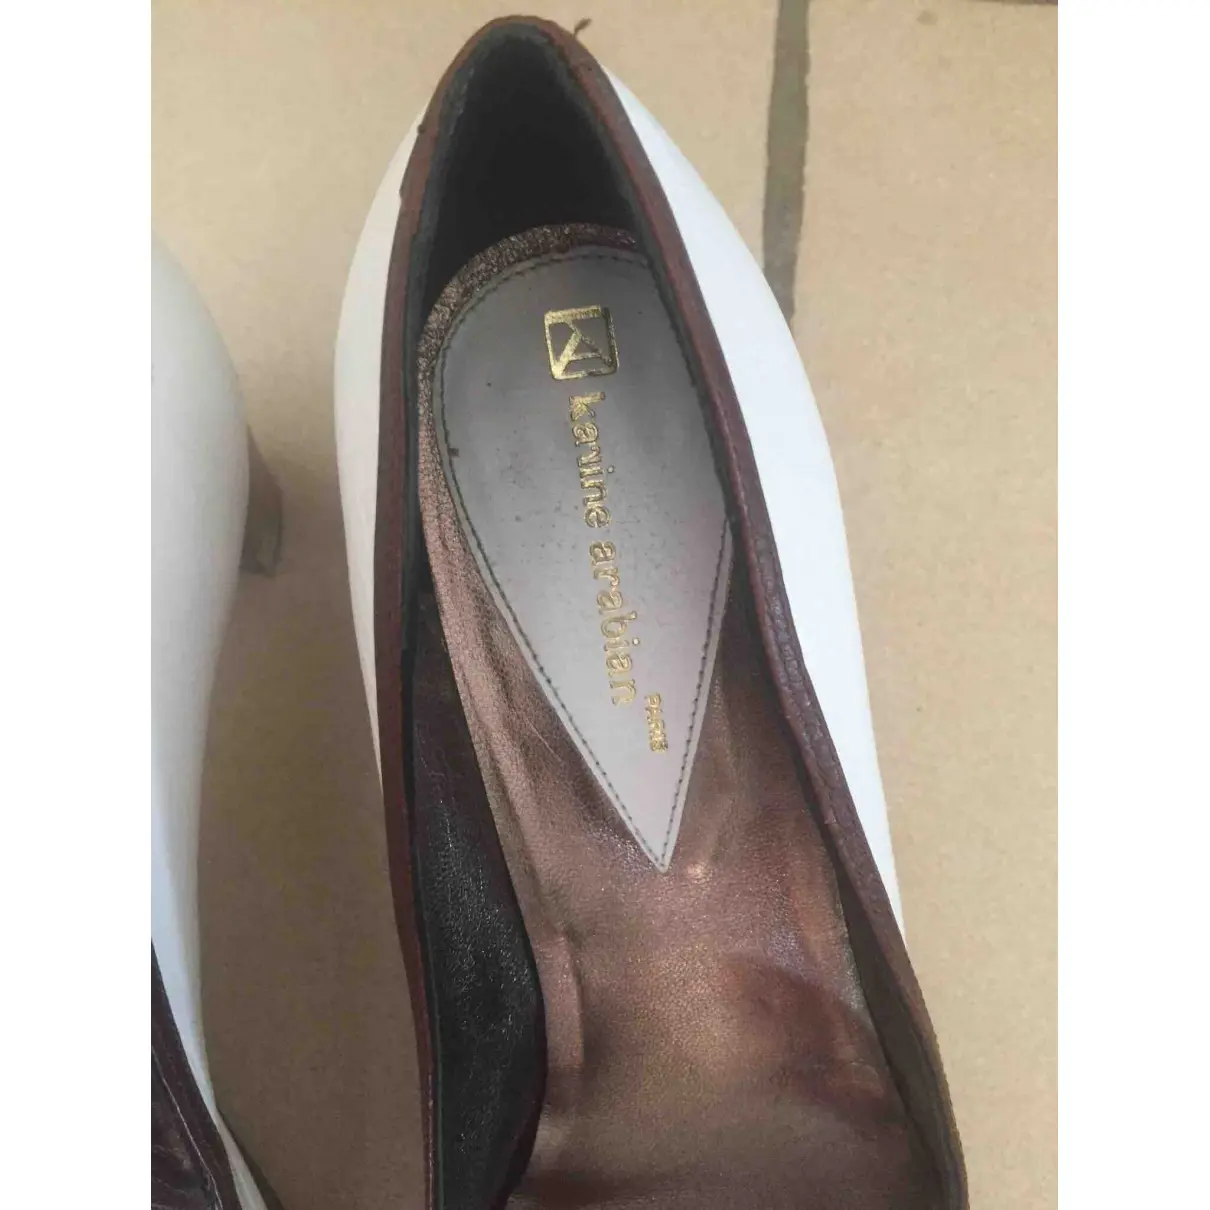 Buy Karine Arabian Leather sandals online